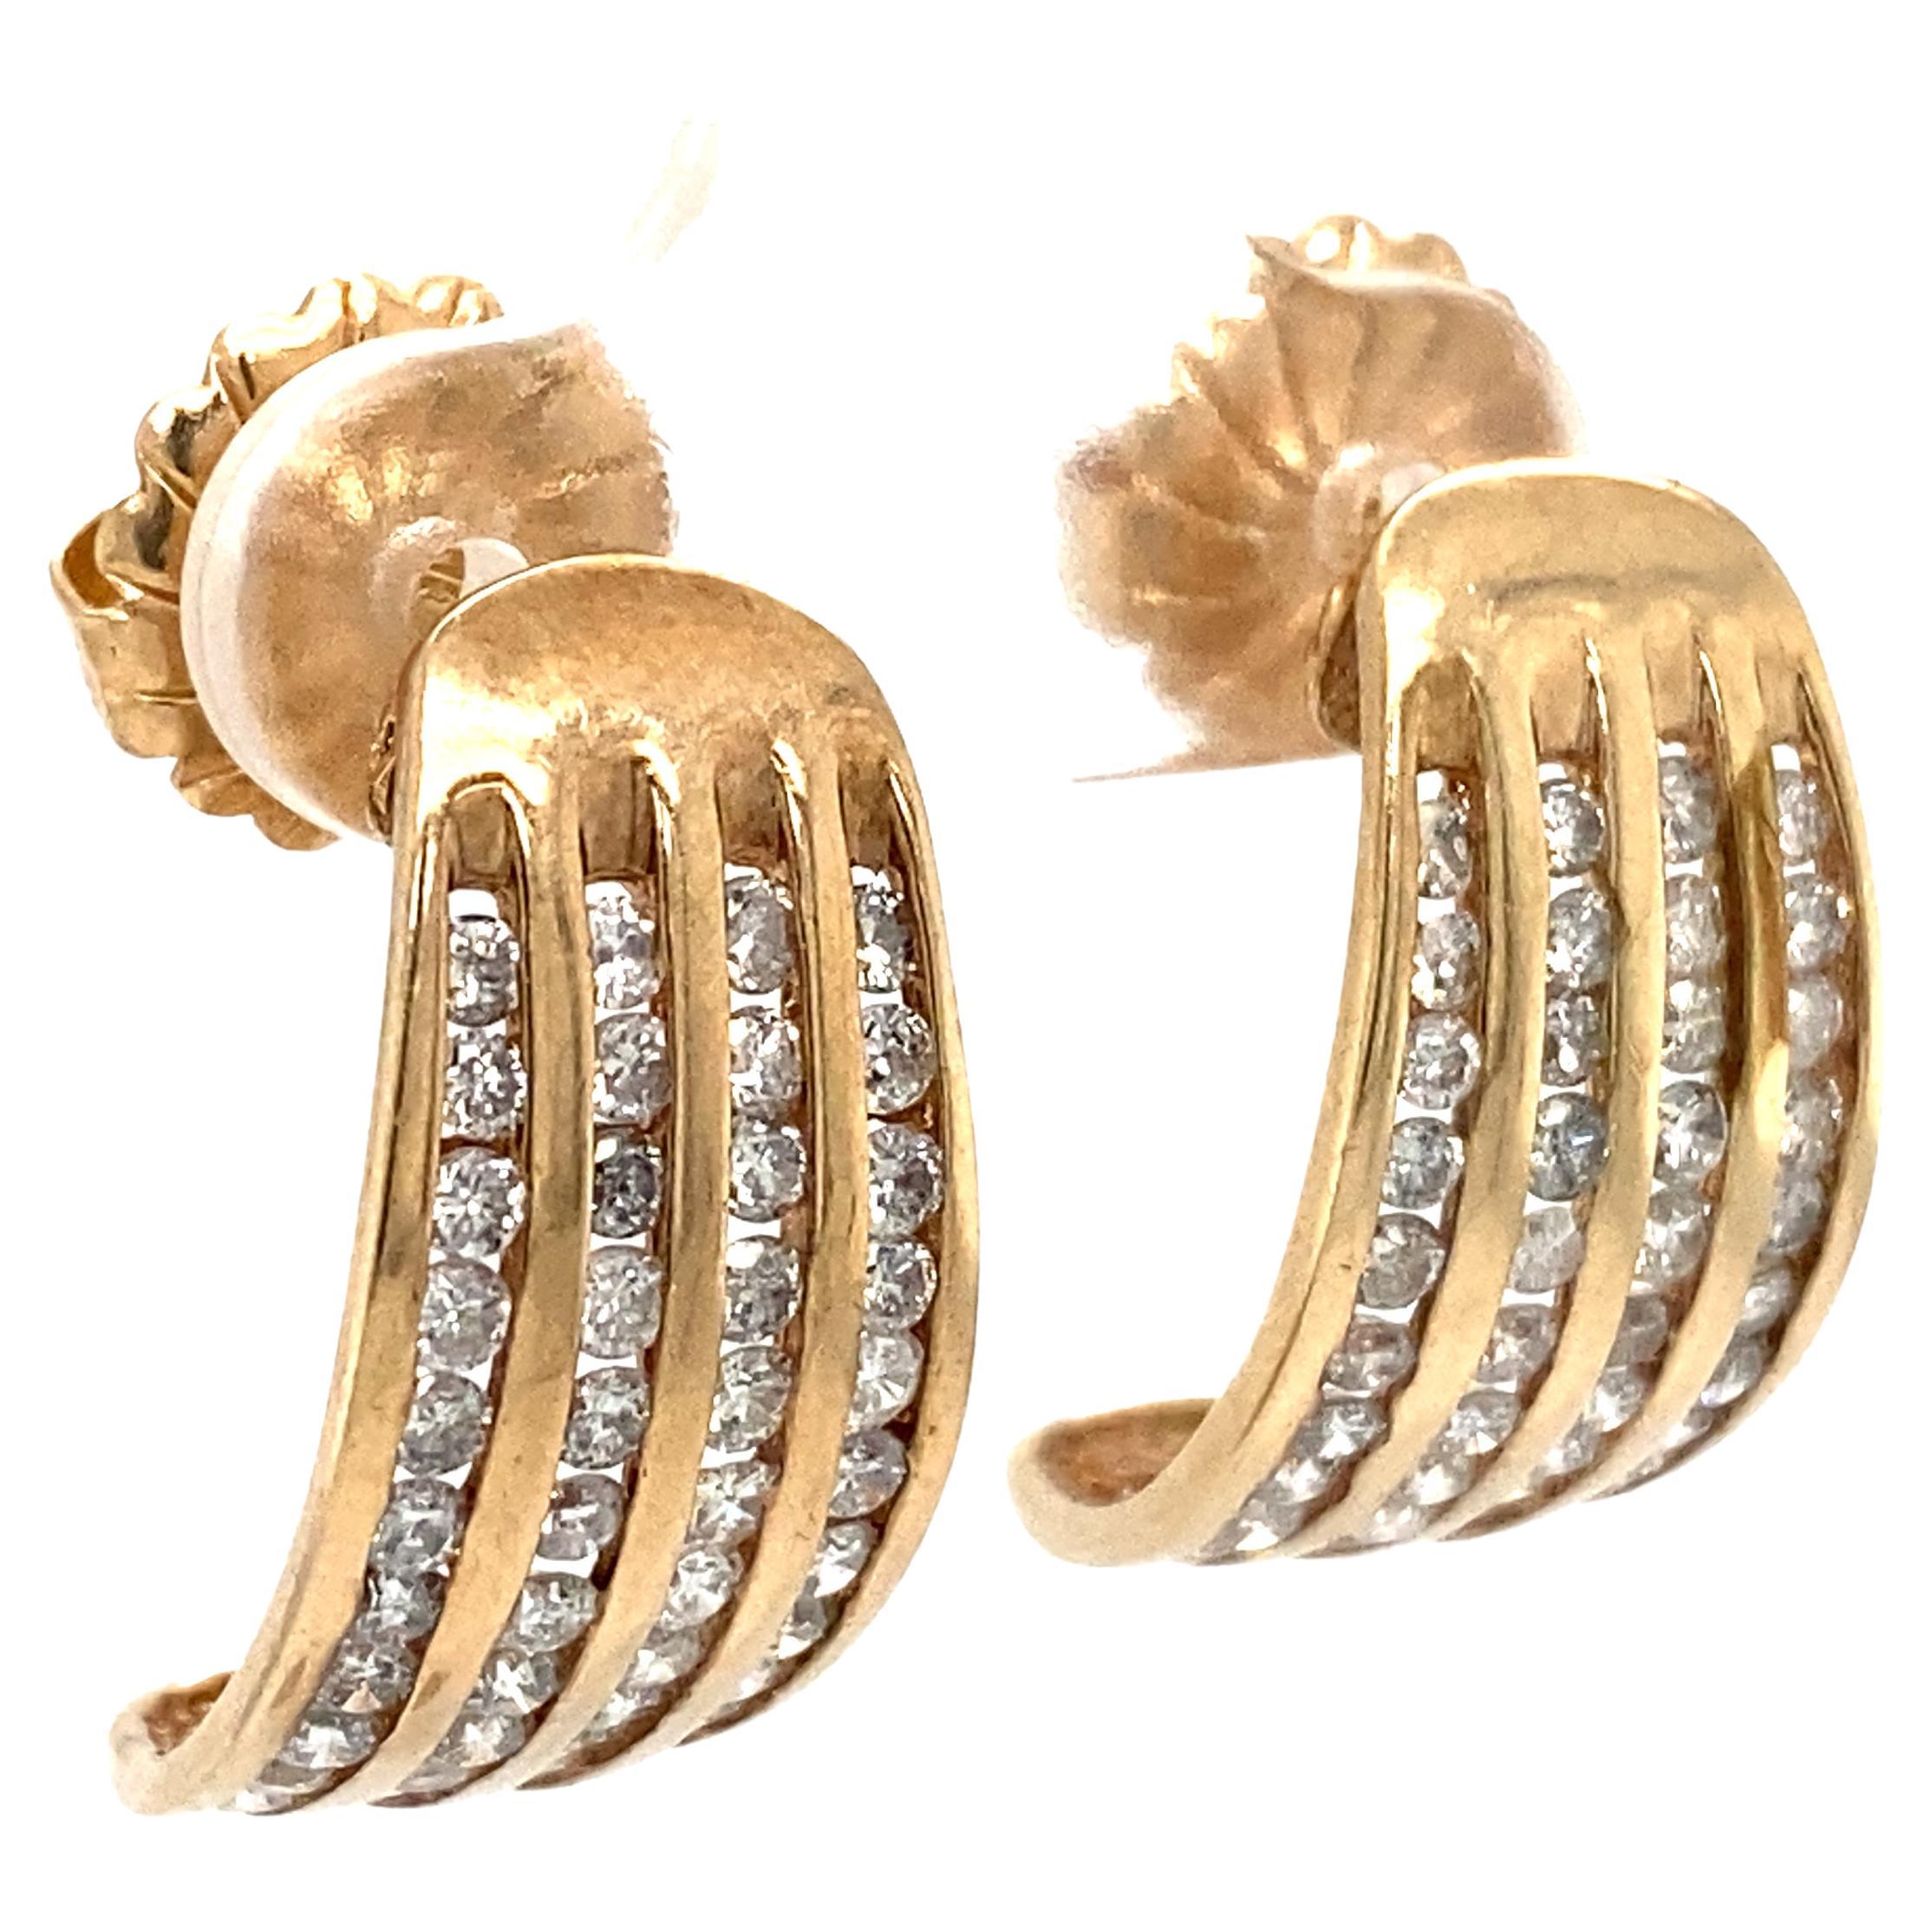 1960s Curved Four Row Channel Set Diamond Earrings in 10 Karat Gold